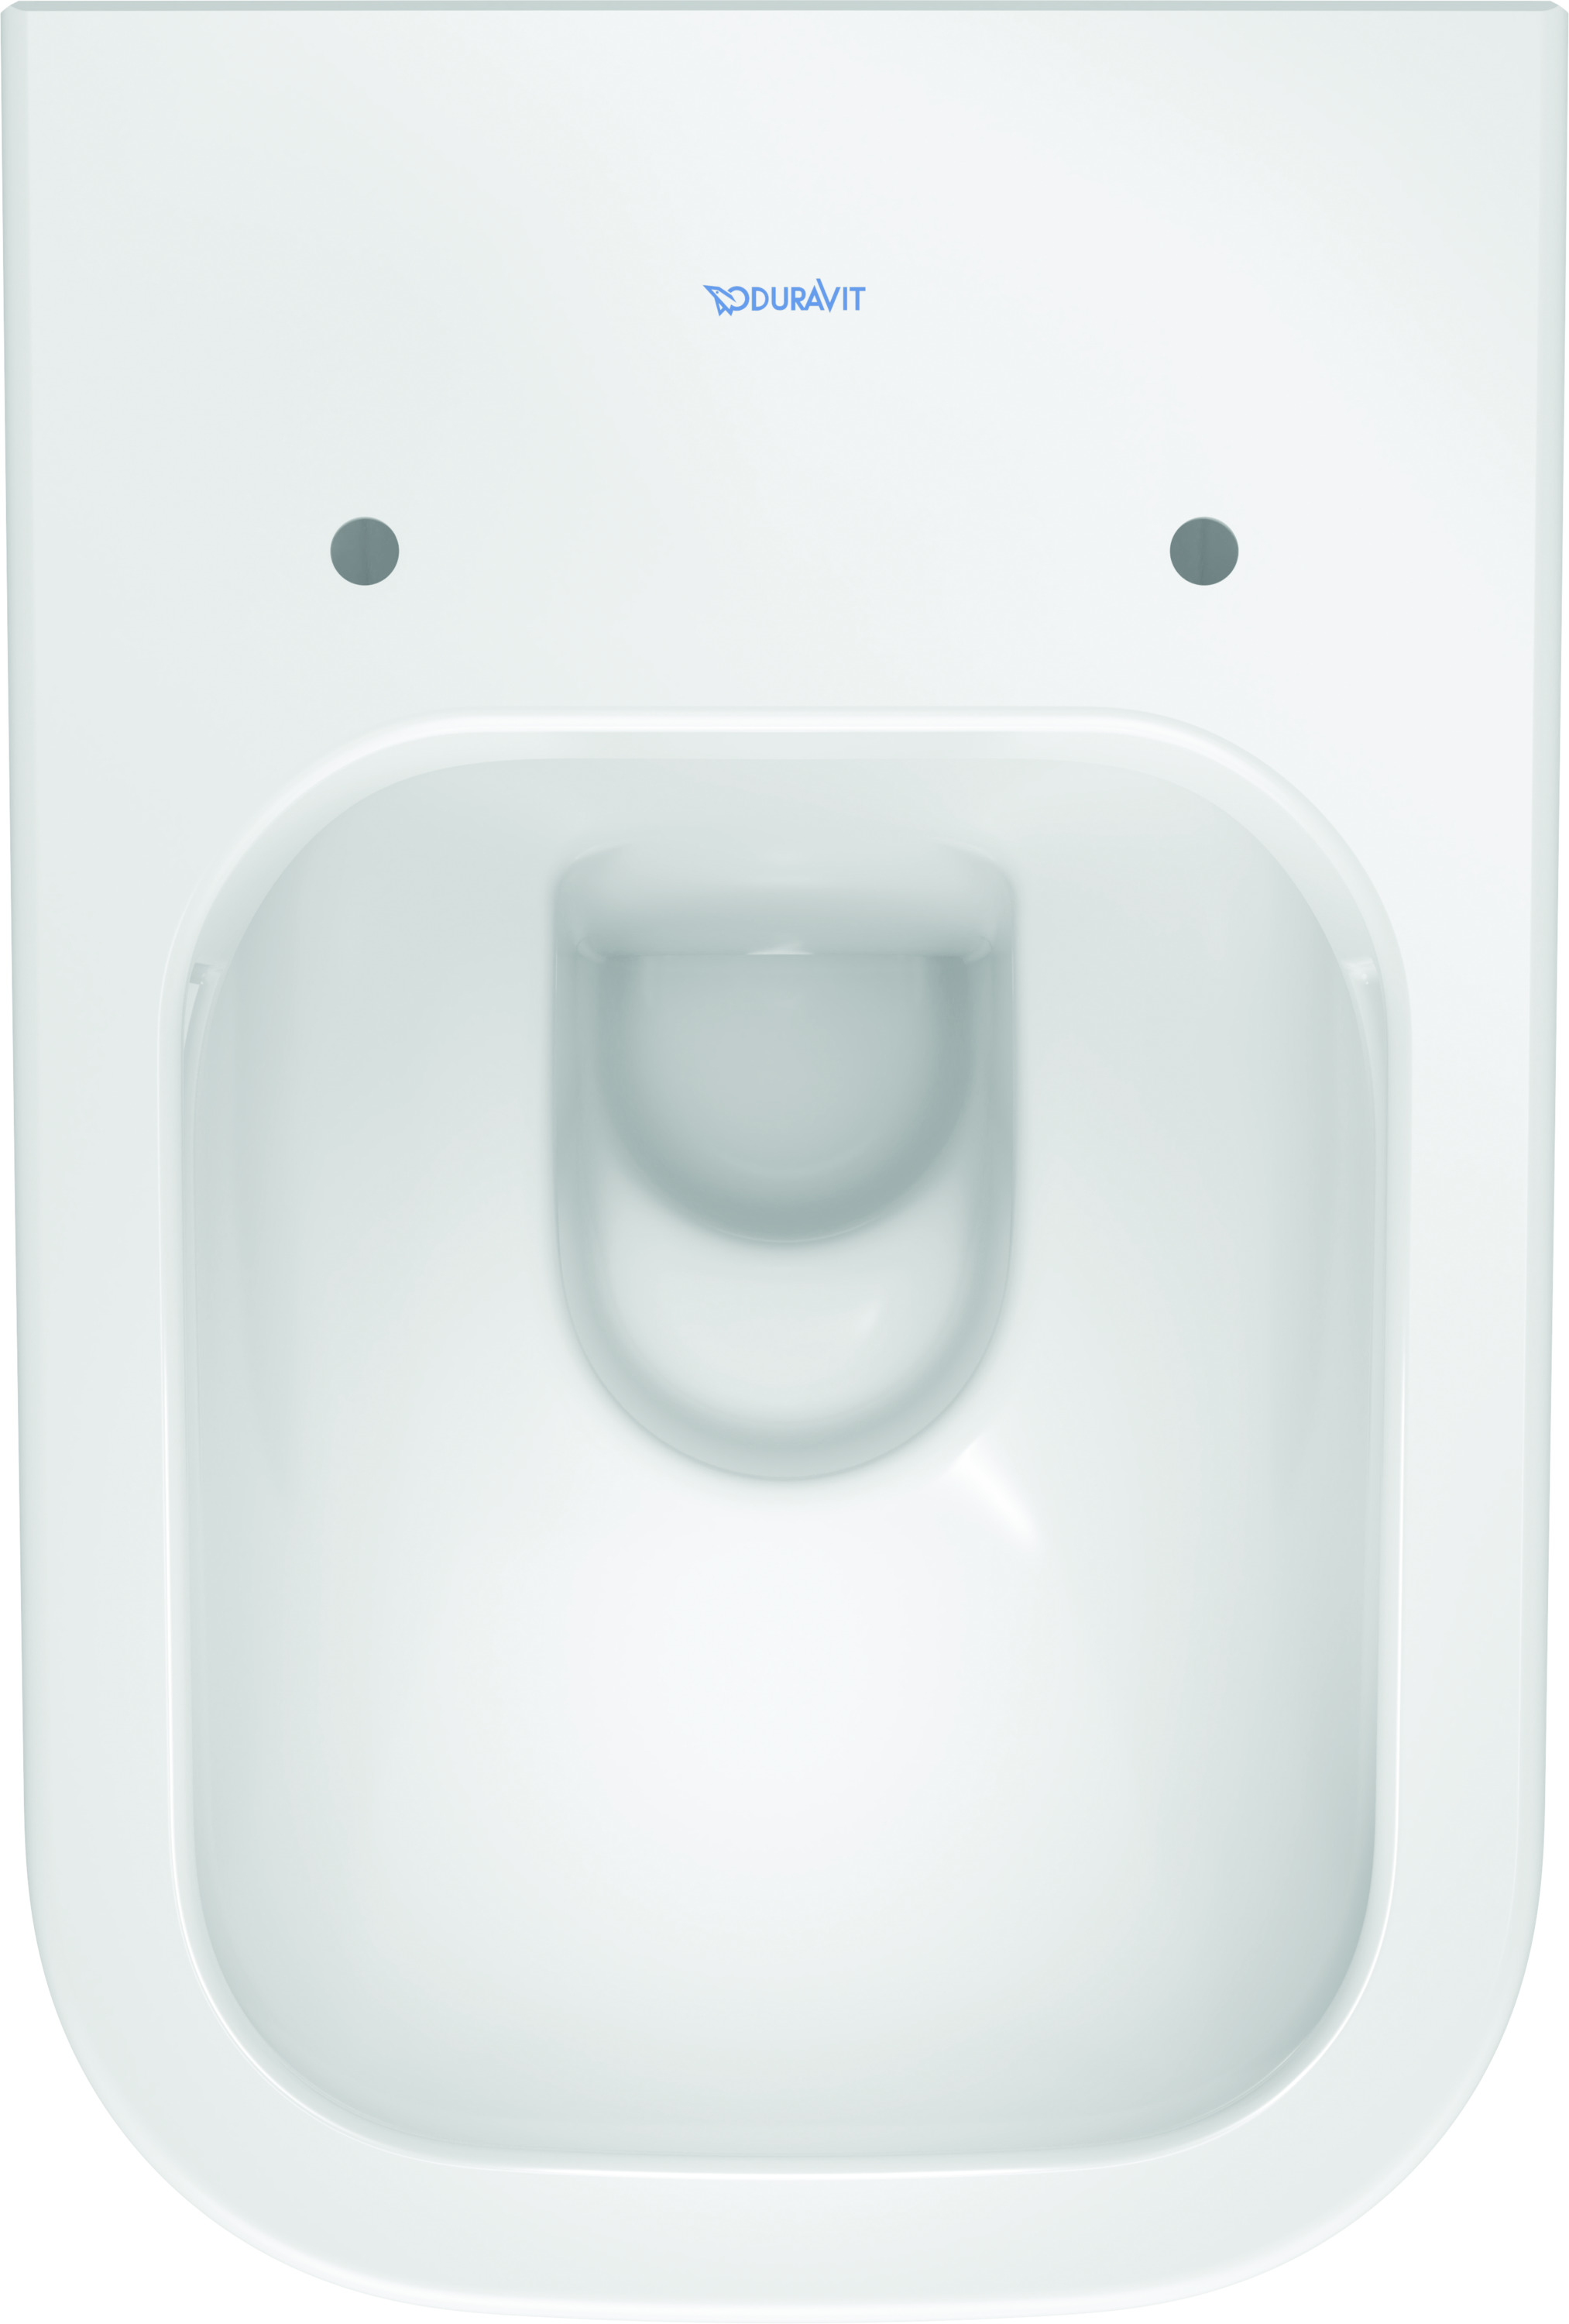 Wand-WC Happy D.2 540 mm Tiefspüler,rimless,Durafix,weiß,HYG